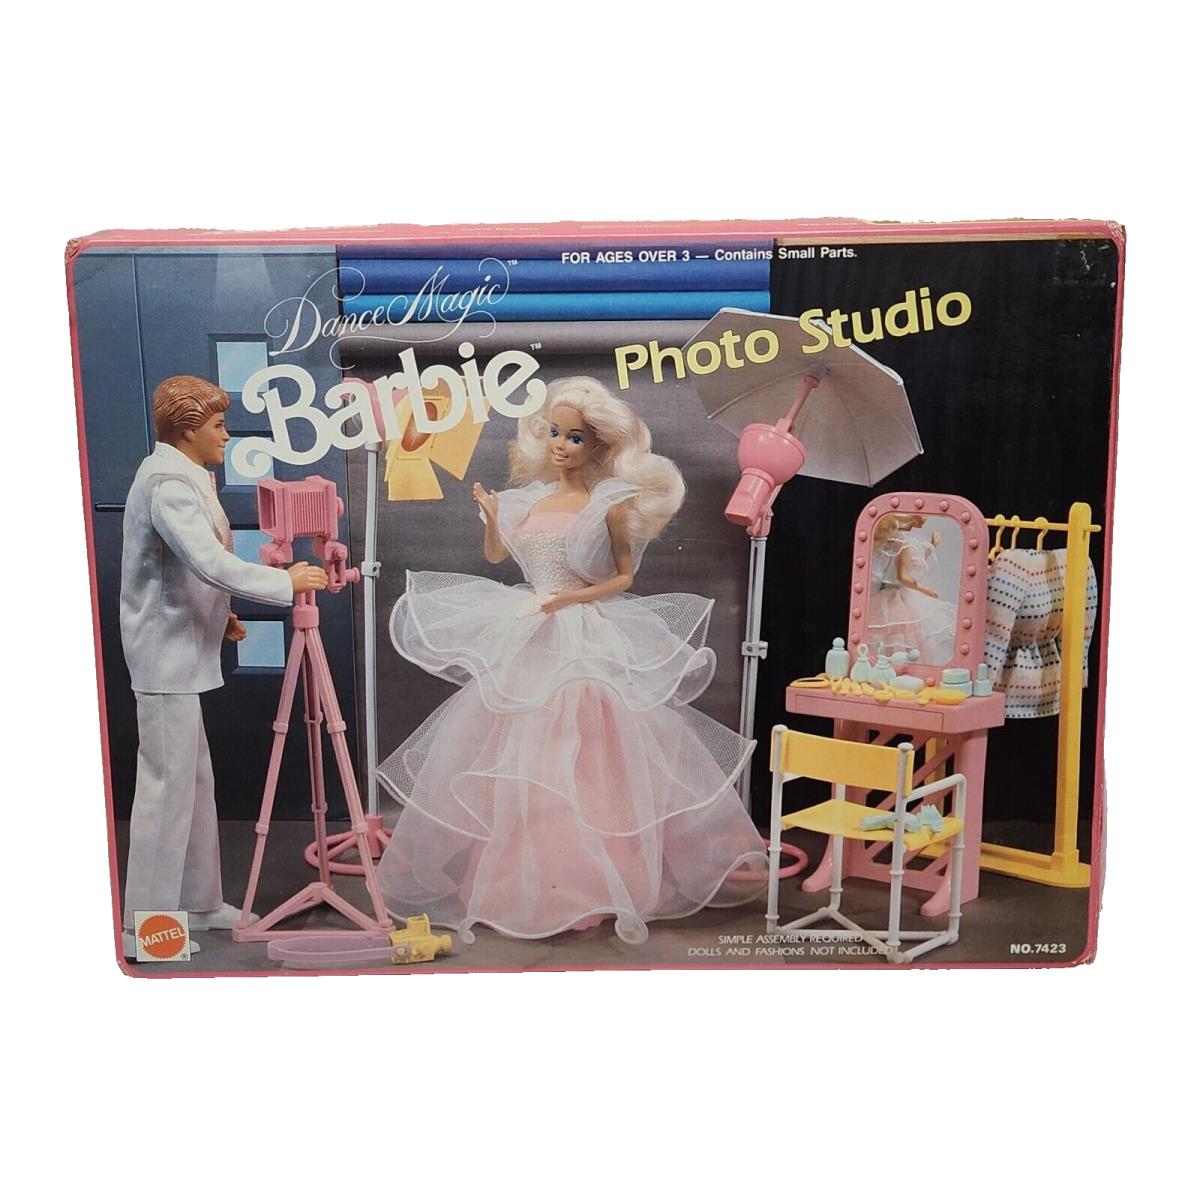 Vintage 1989 Mattel Dance Magic Barbie Photo Studio 7423 Complete